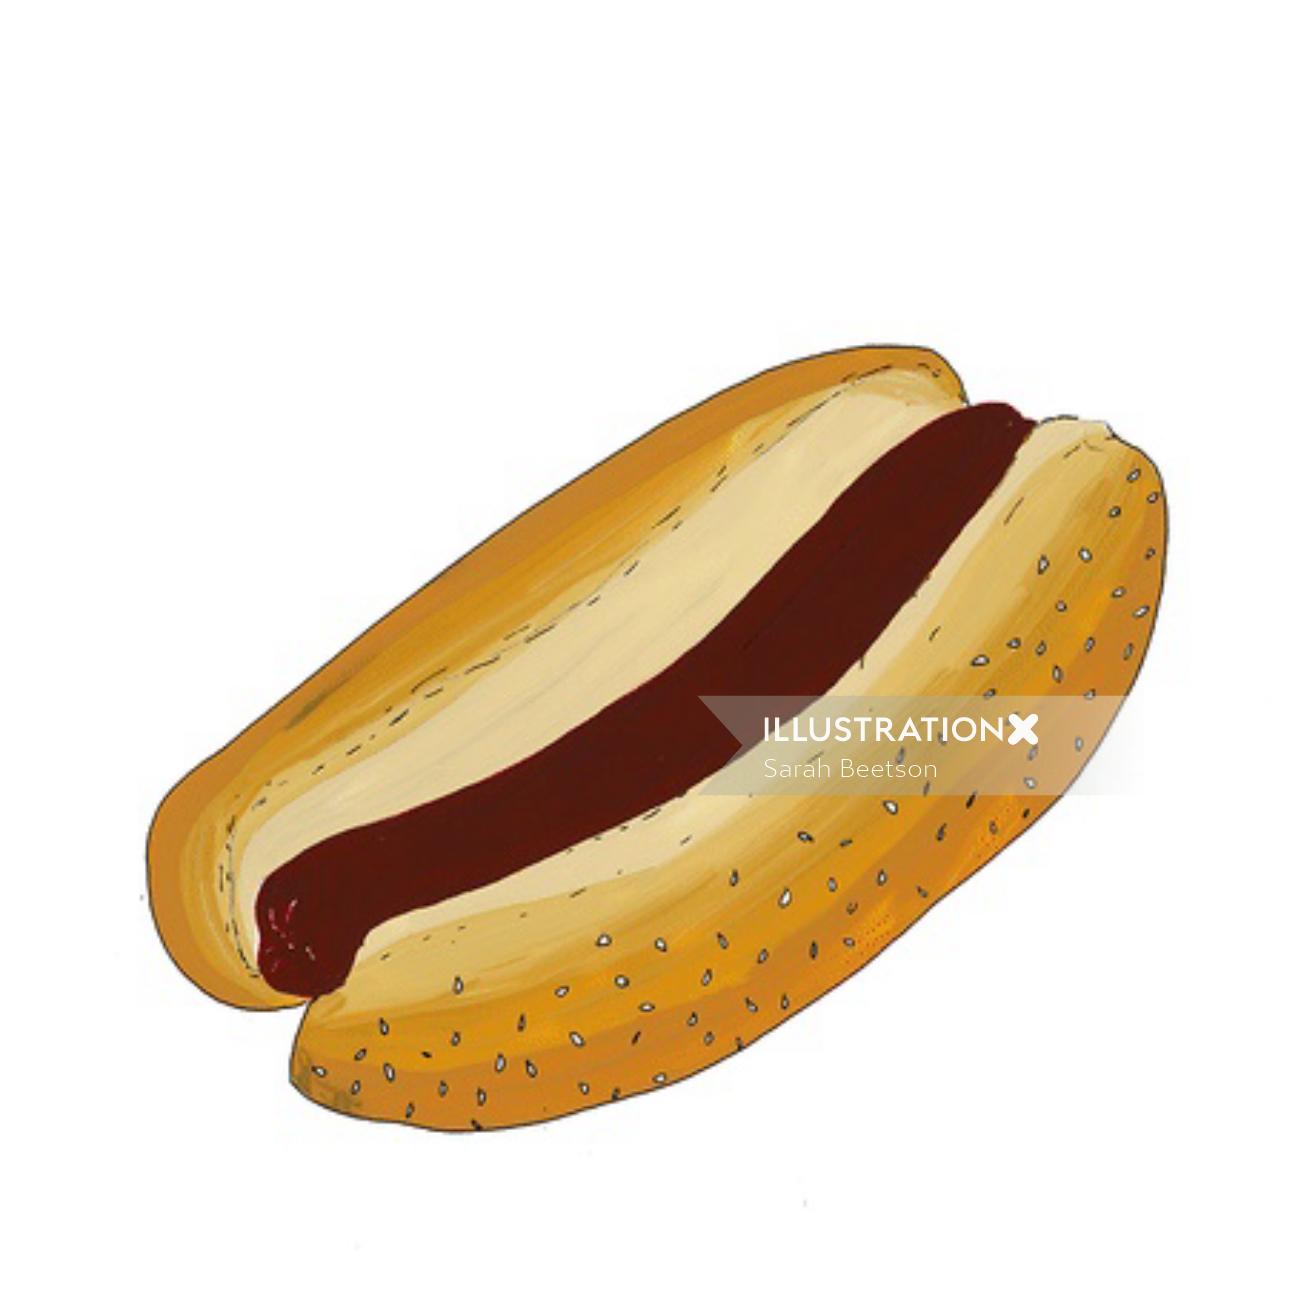 Animation of Hotdog with sauce
